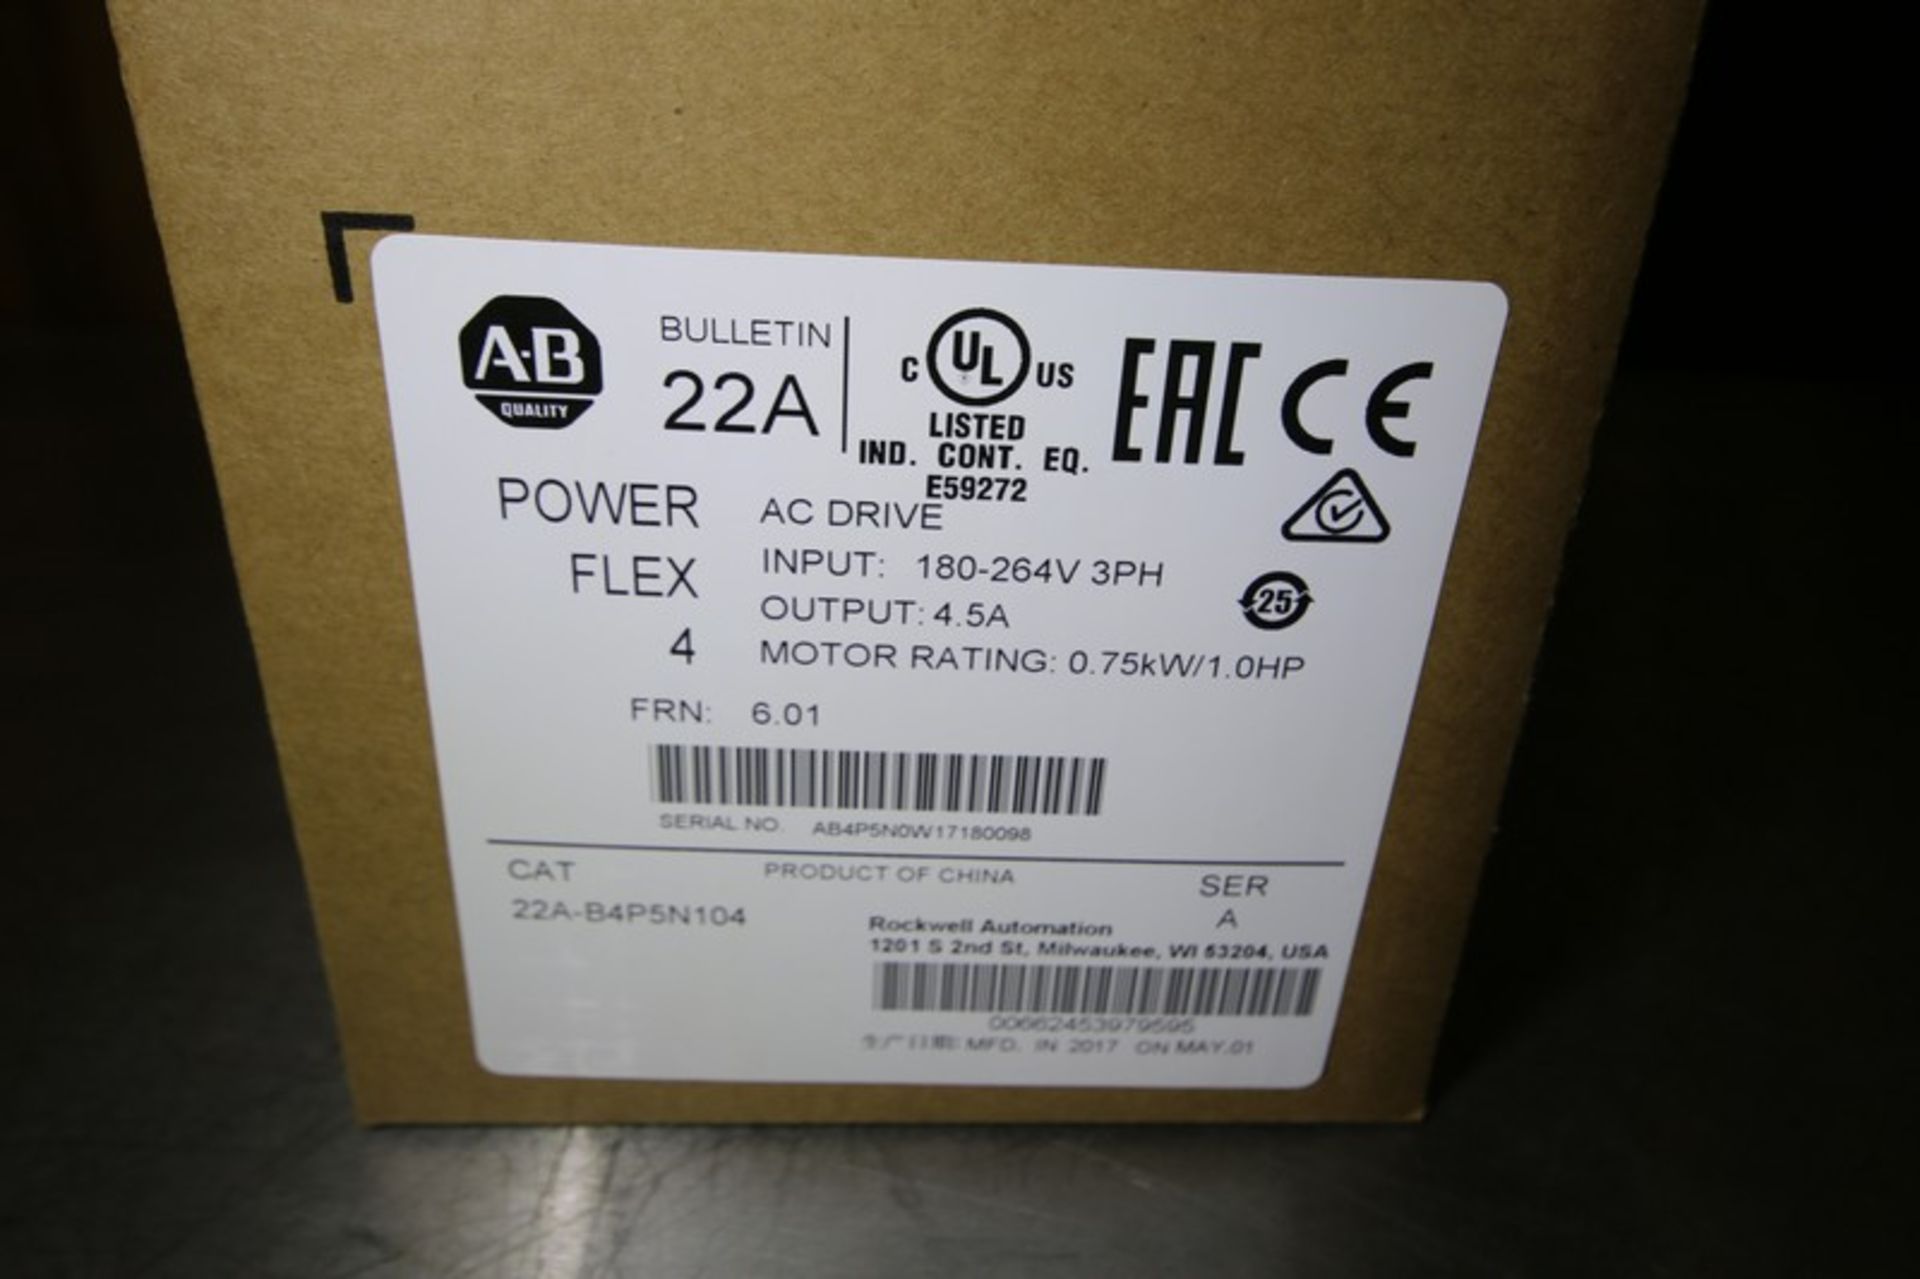 New Allen Bradley 1 hp Power Flex 4 VFD, Cat. No. 22A-B4P5N104 Series A (INV#88429)(Located @ the - Image 4 of 4